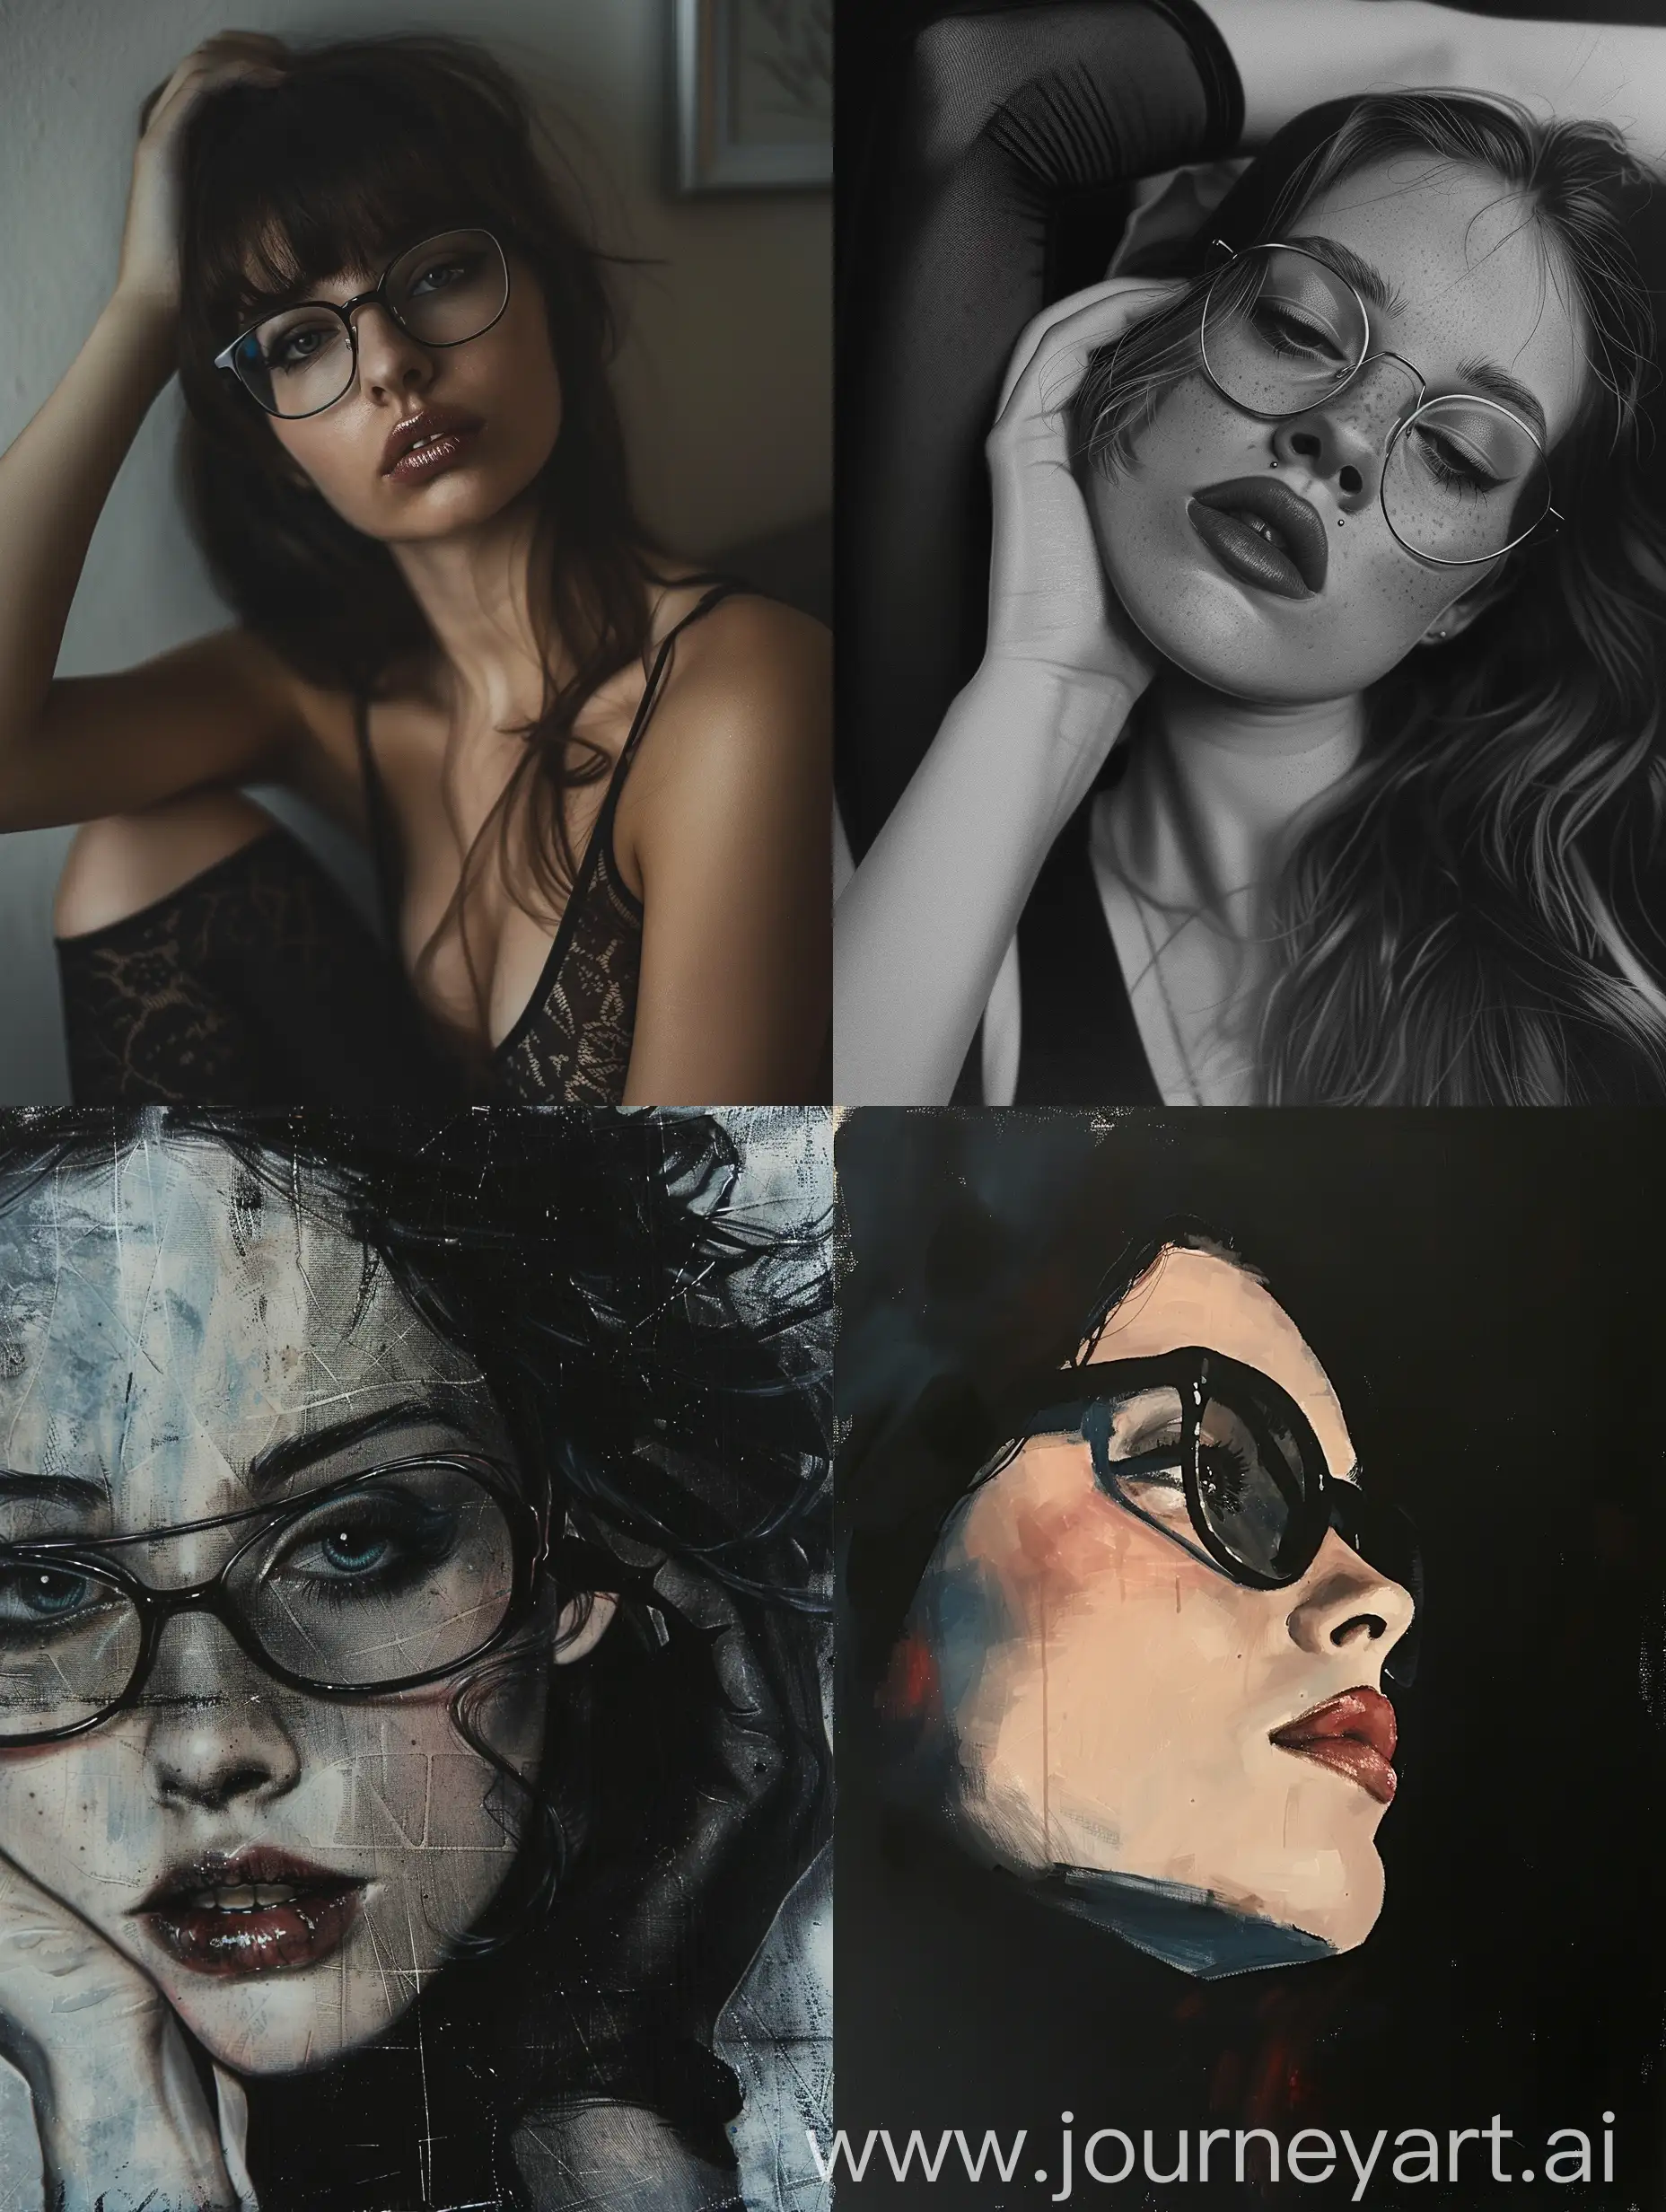 Stylish-Woman-Fiona-Wearing-Glasses-and-Black-Stockings